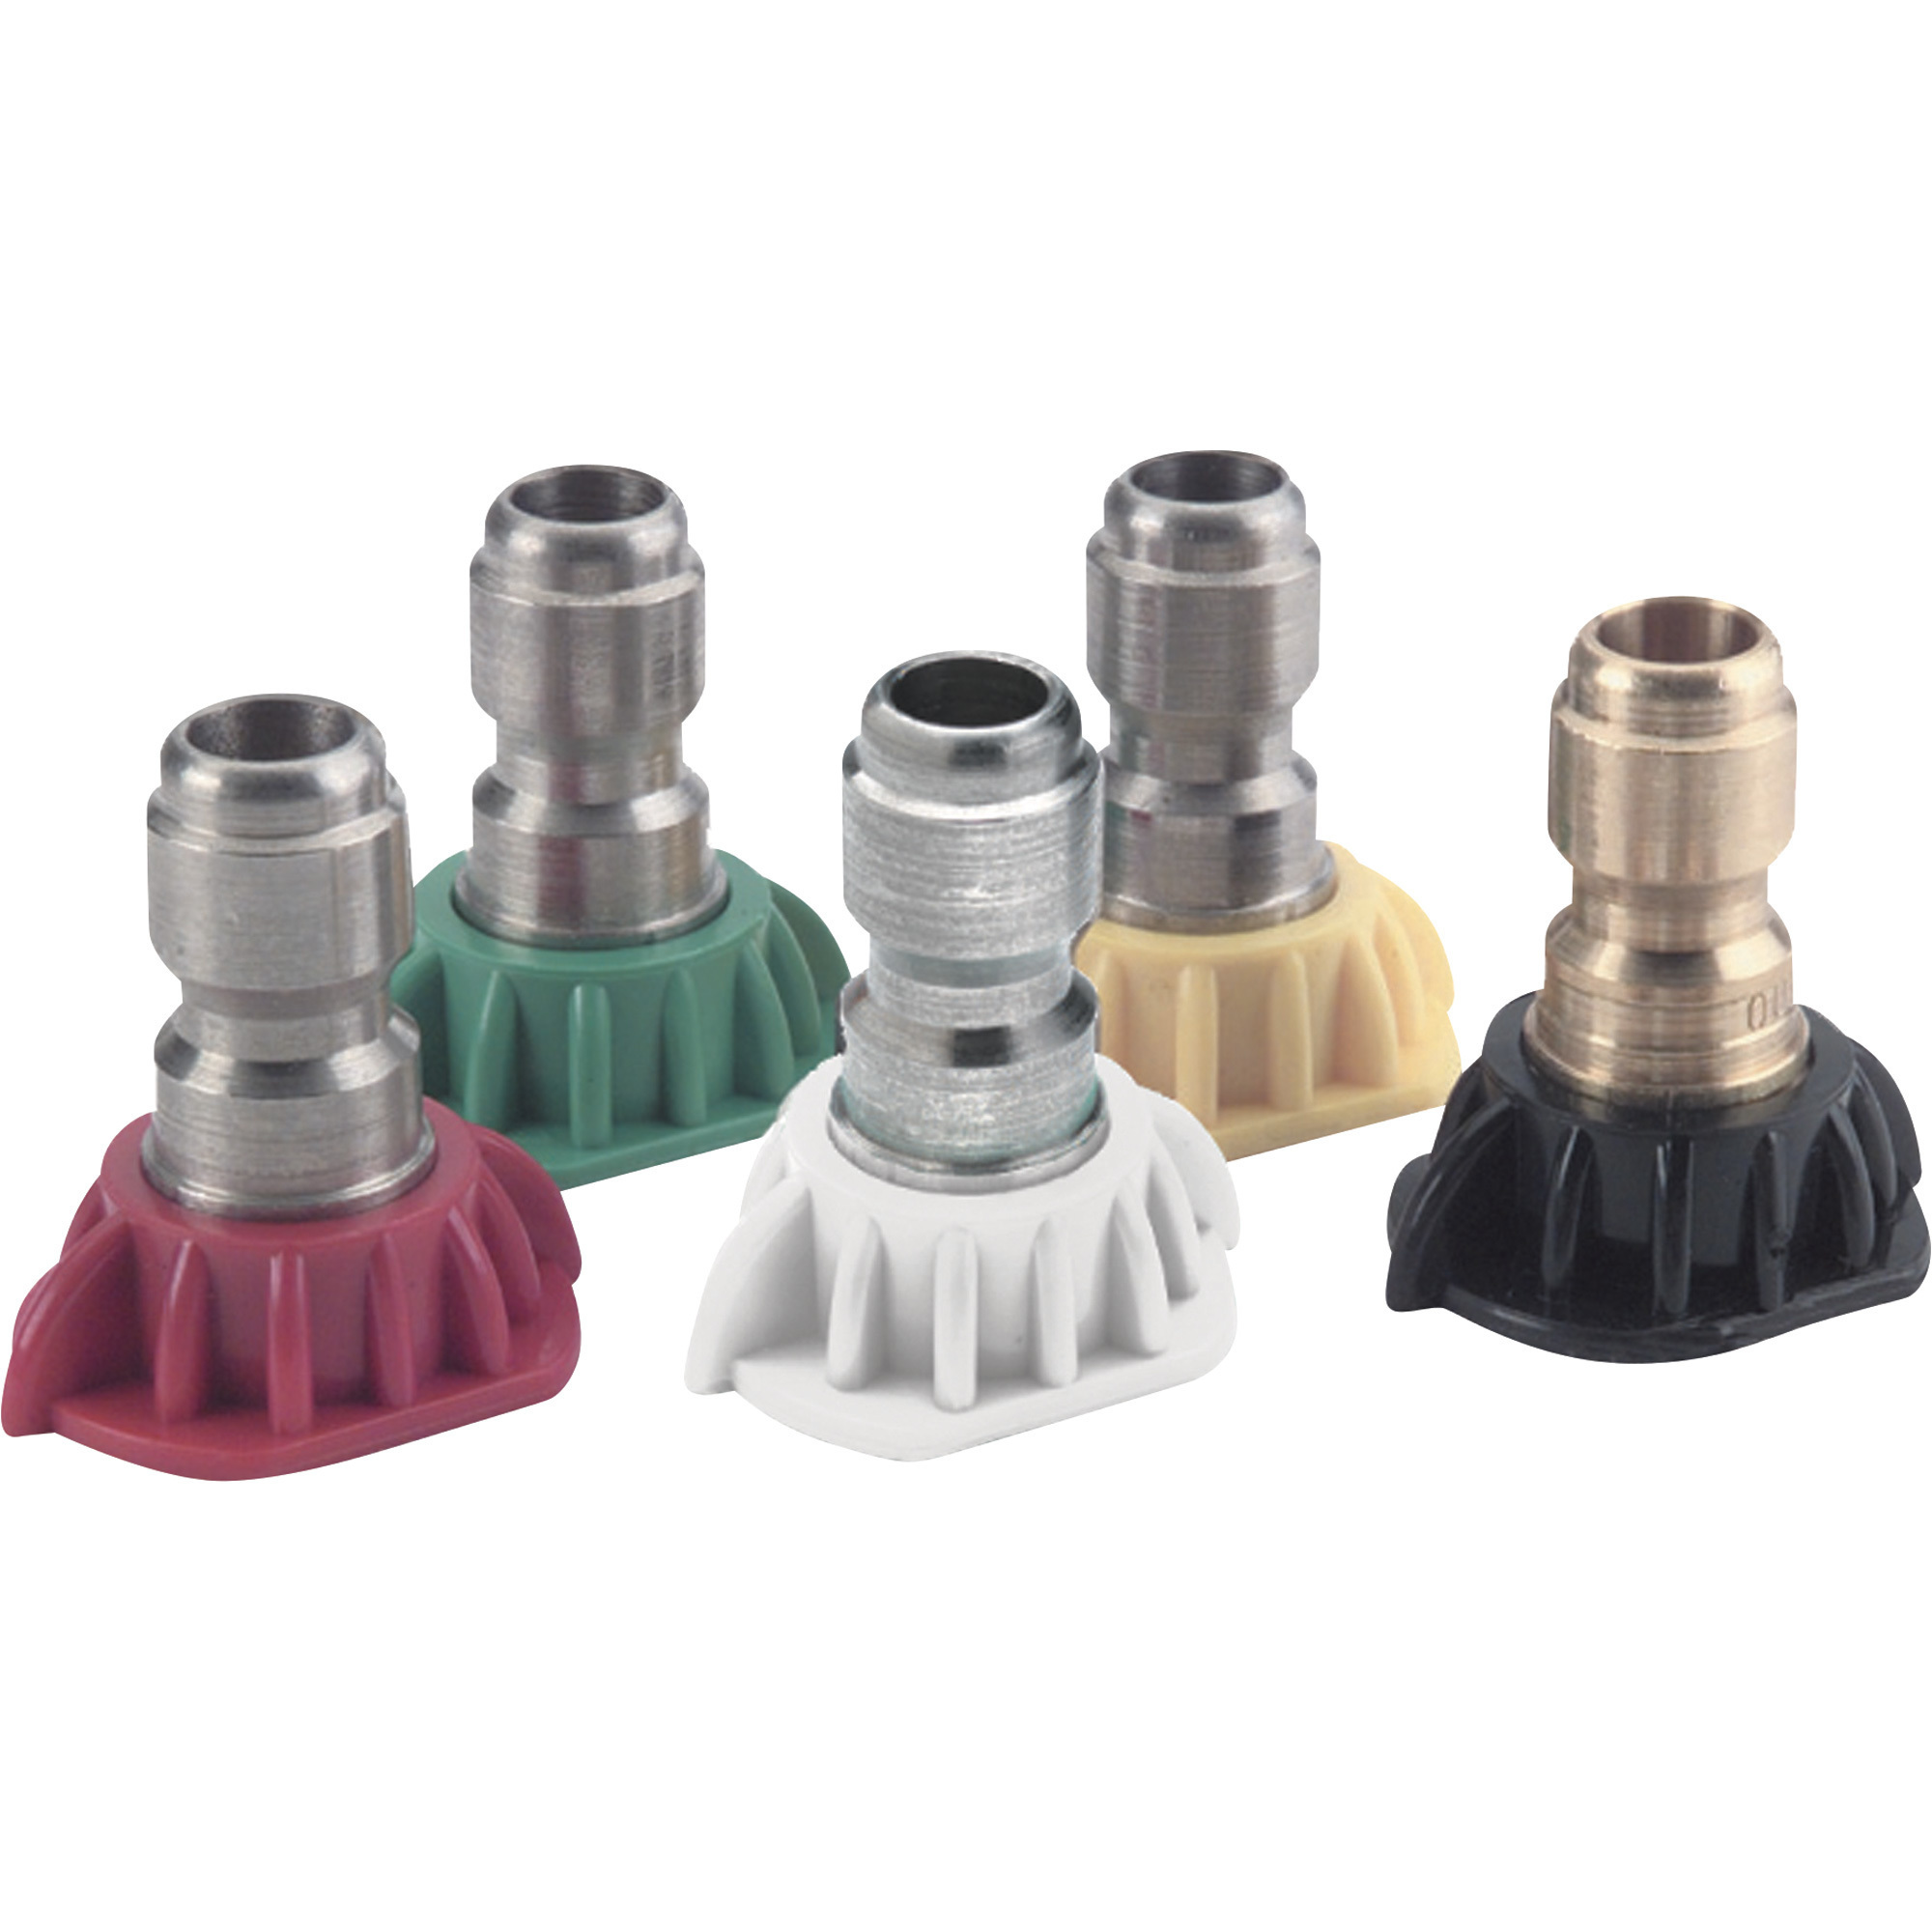 NorthStar 5-Pack Pressure Washer Nozzle Set â 5.5 Size, Model N105087P